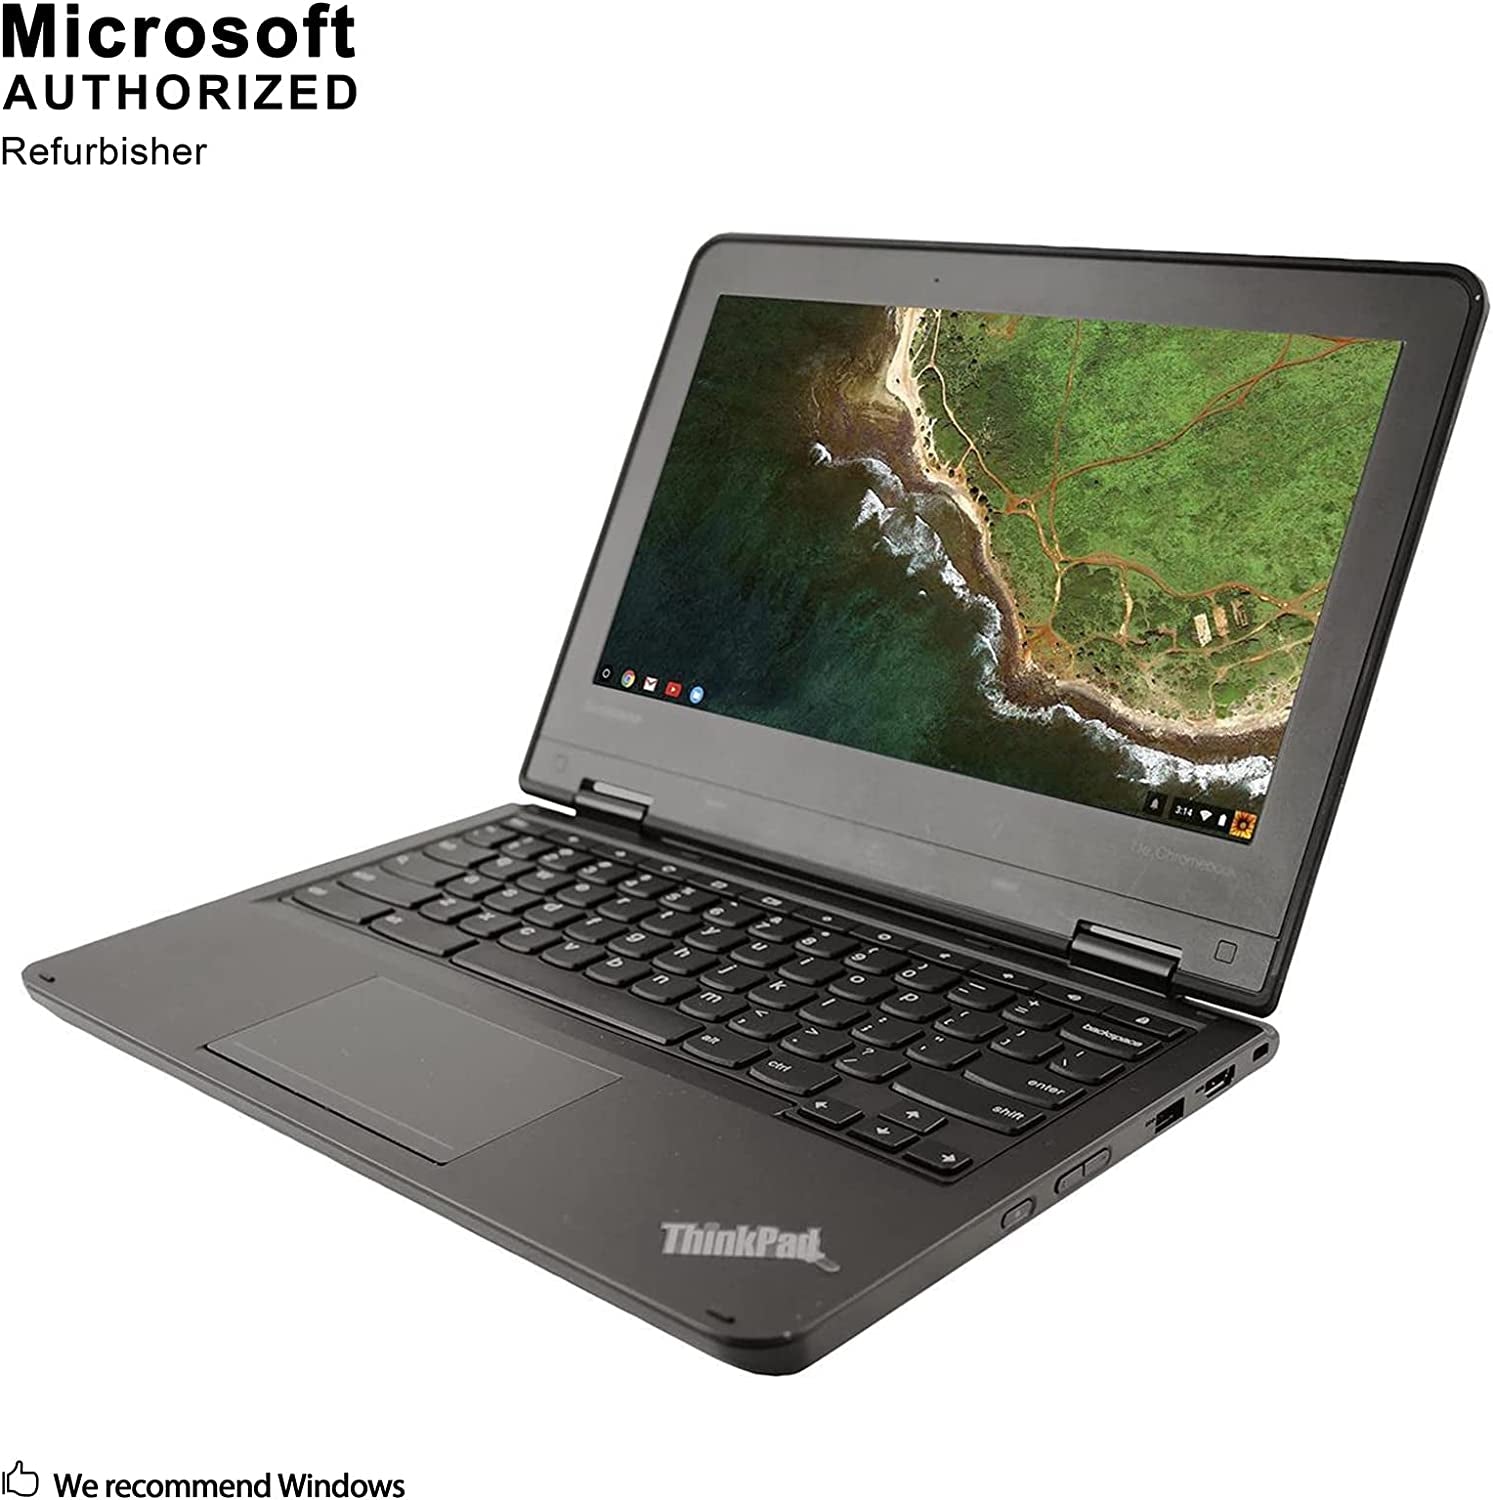 Lenovo Thinkpad 11E Chromebook 11 Inch Laotop PC, Intel N2920 1.86Ghz, 4G RAM, 16G SSD, Wifi, HDMI, Chrome Os (Renewed)